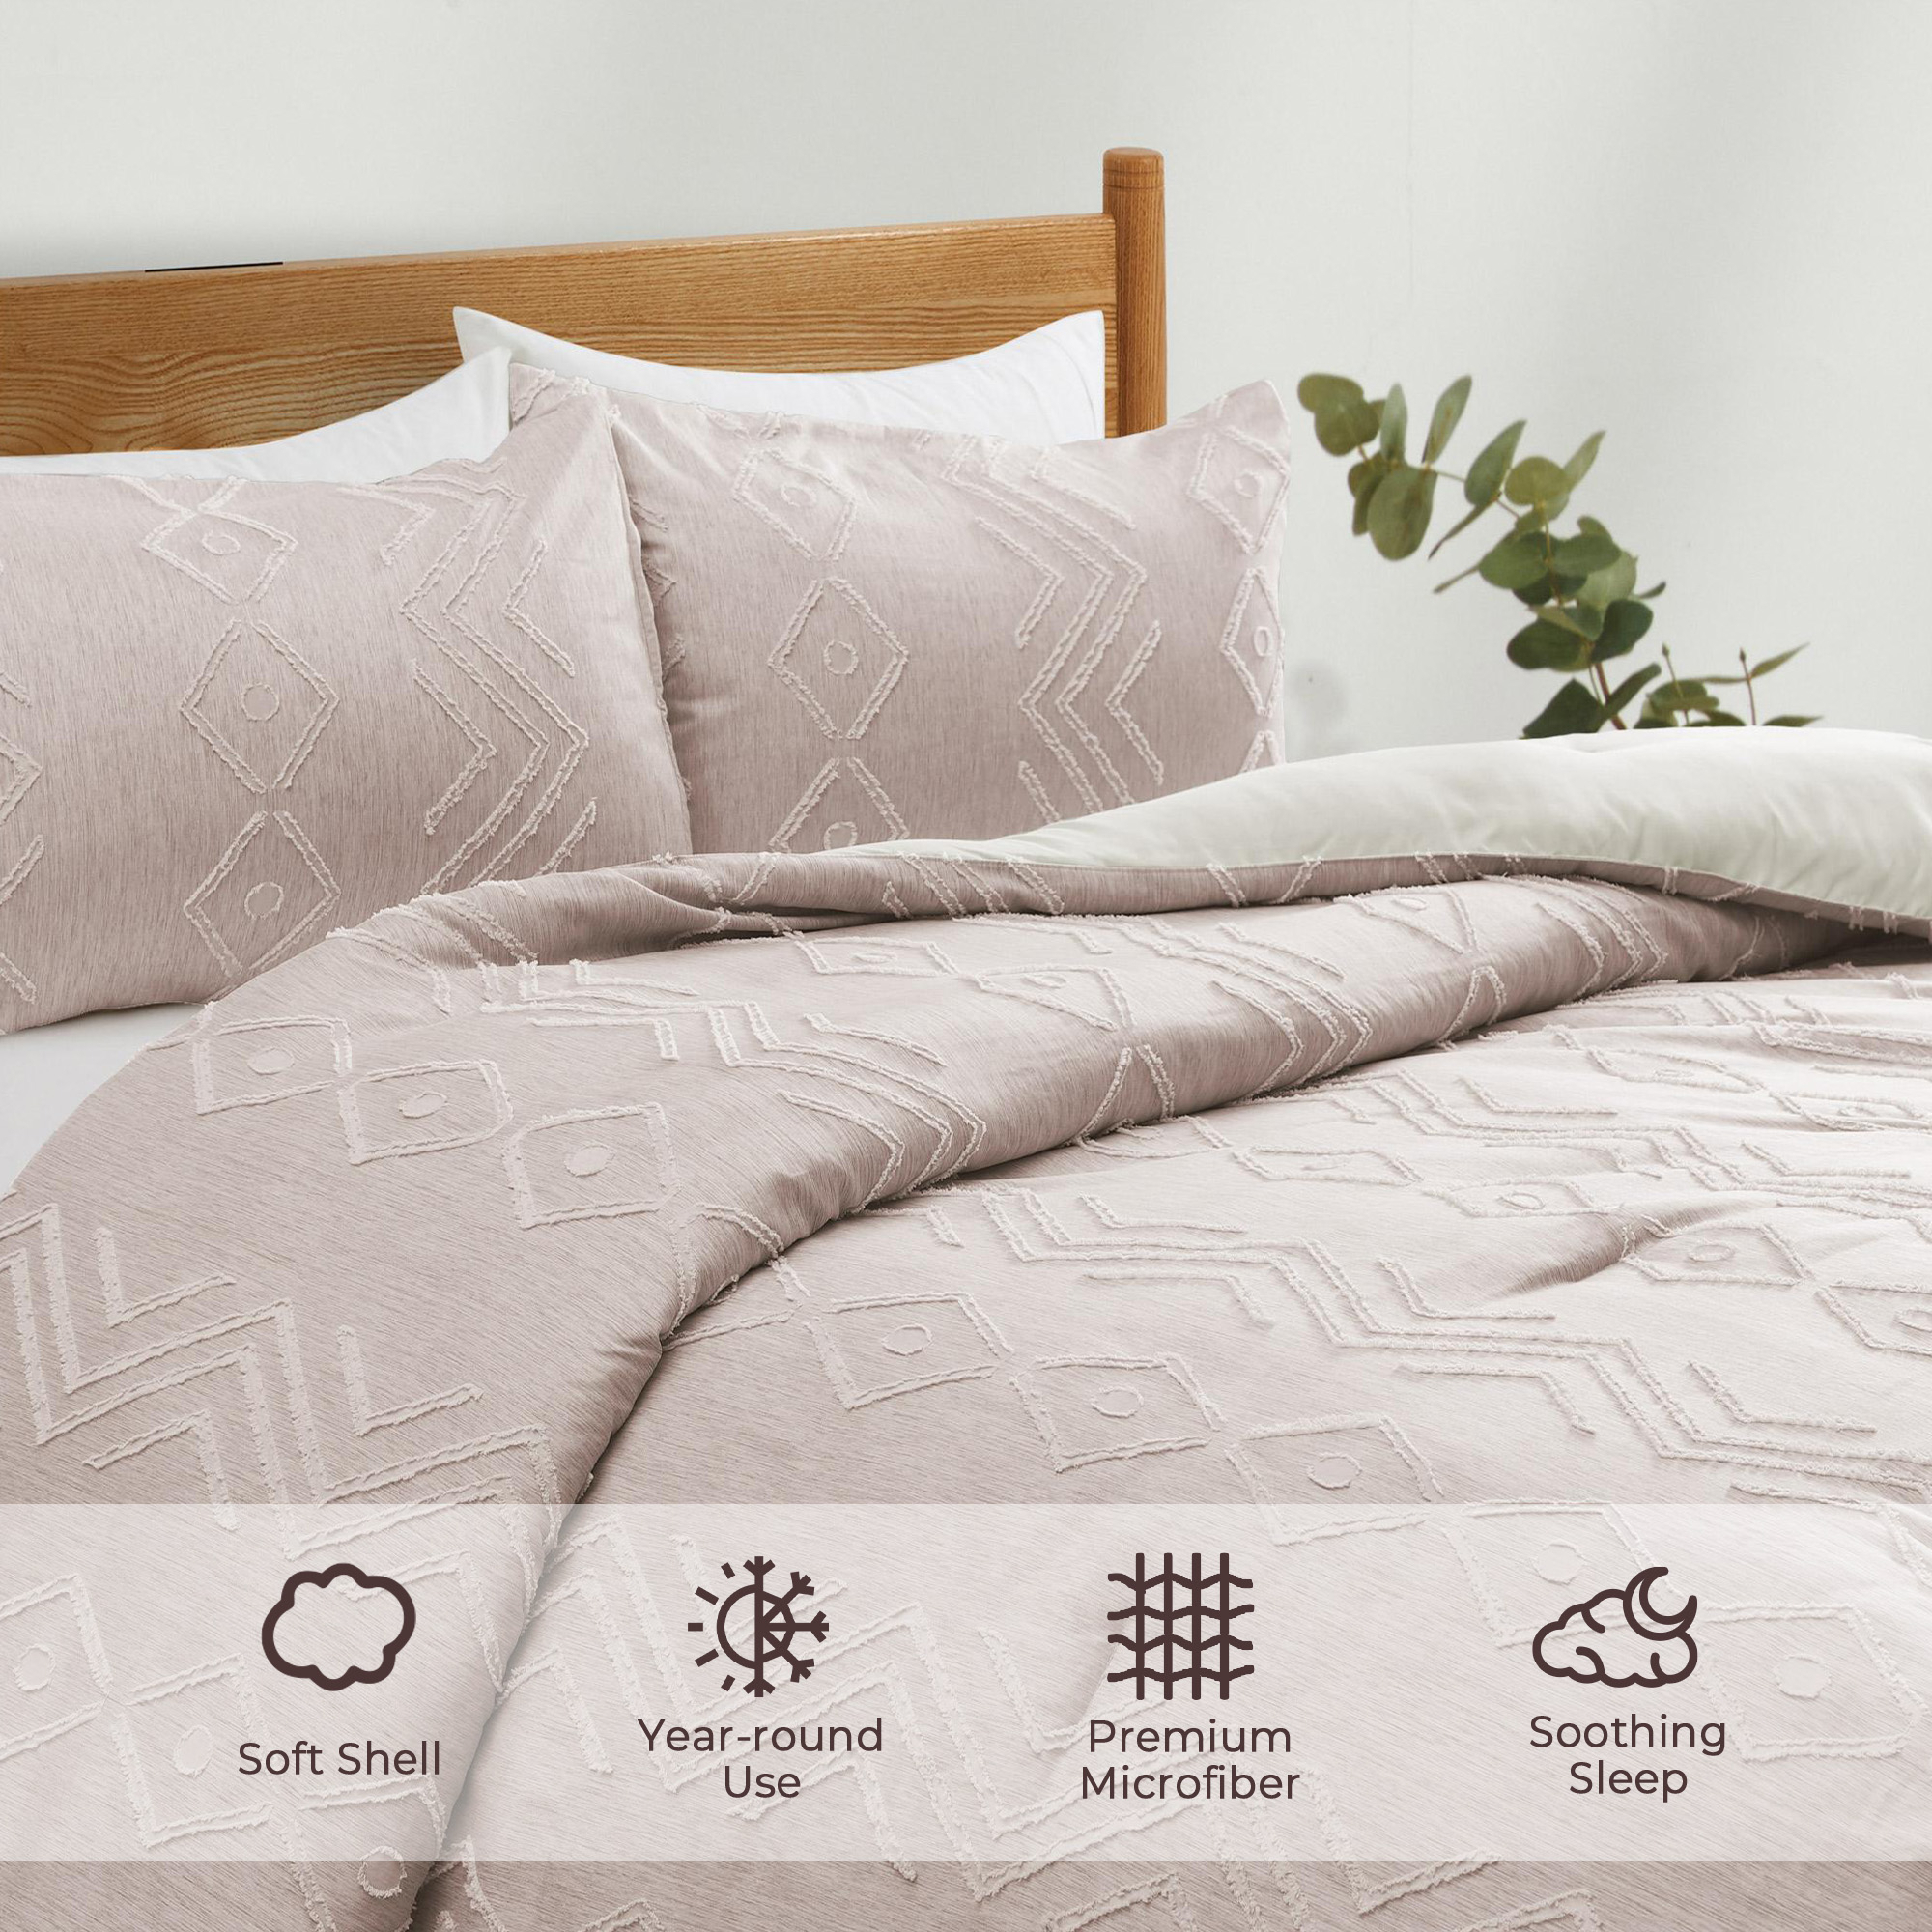 Soft Plush All Seasons Down Alternative Comforter Set With Shams - Coral, King